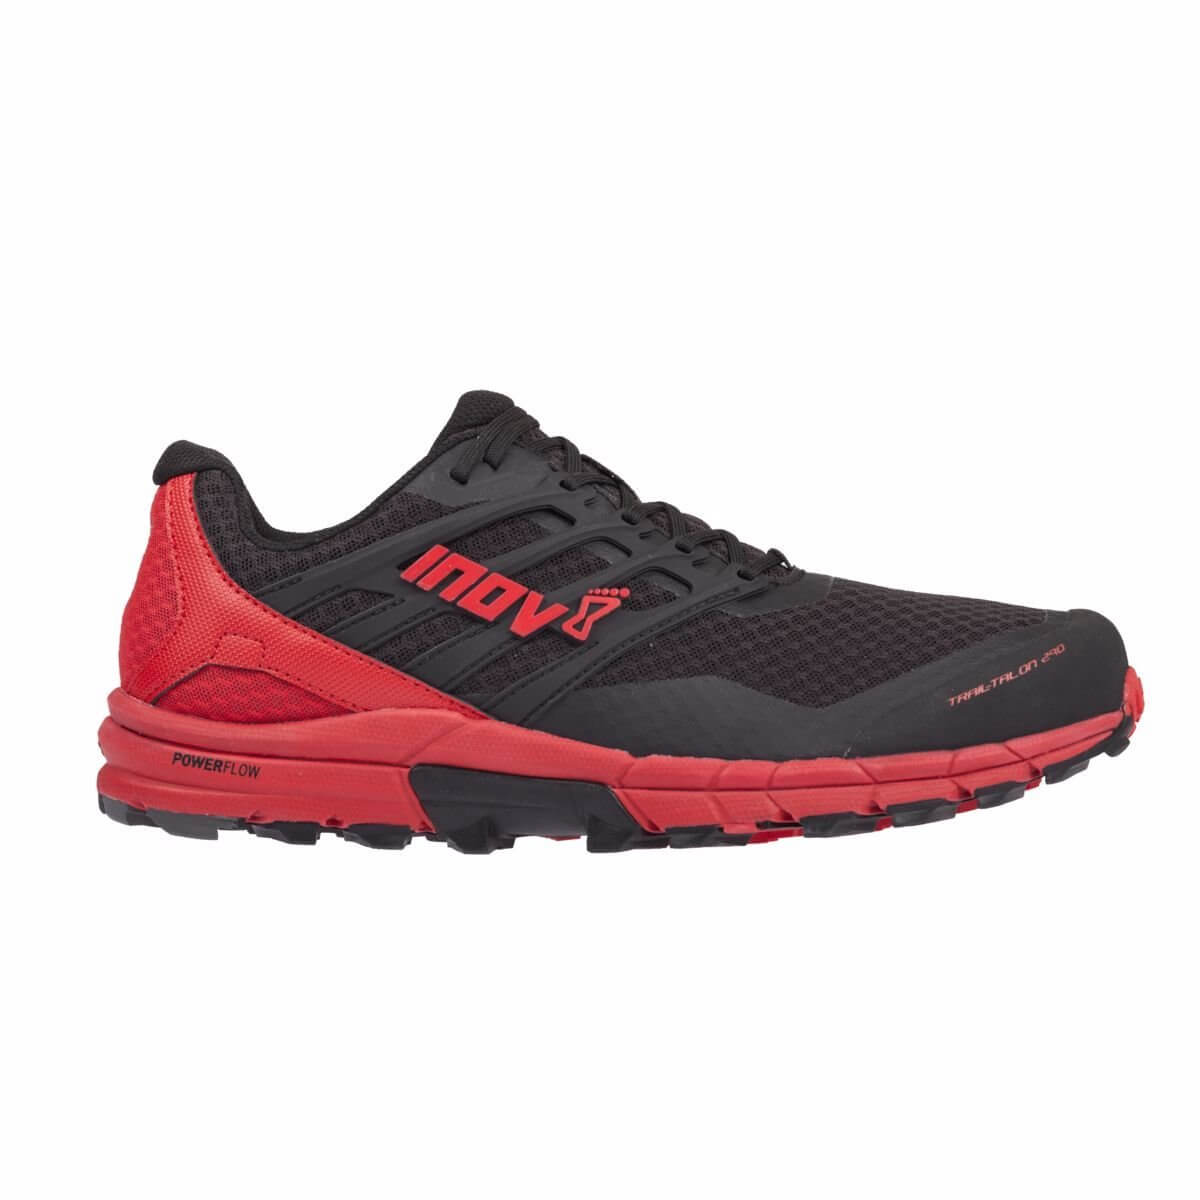 Bežecké topánky Inov-8 TRAIL TALON 290 (S) black/red černá s červenou